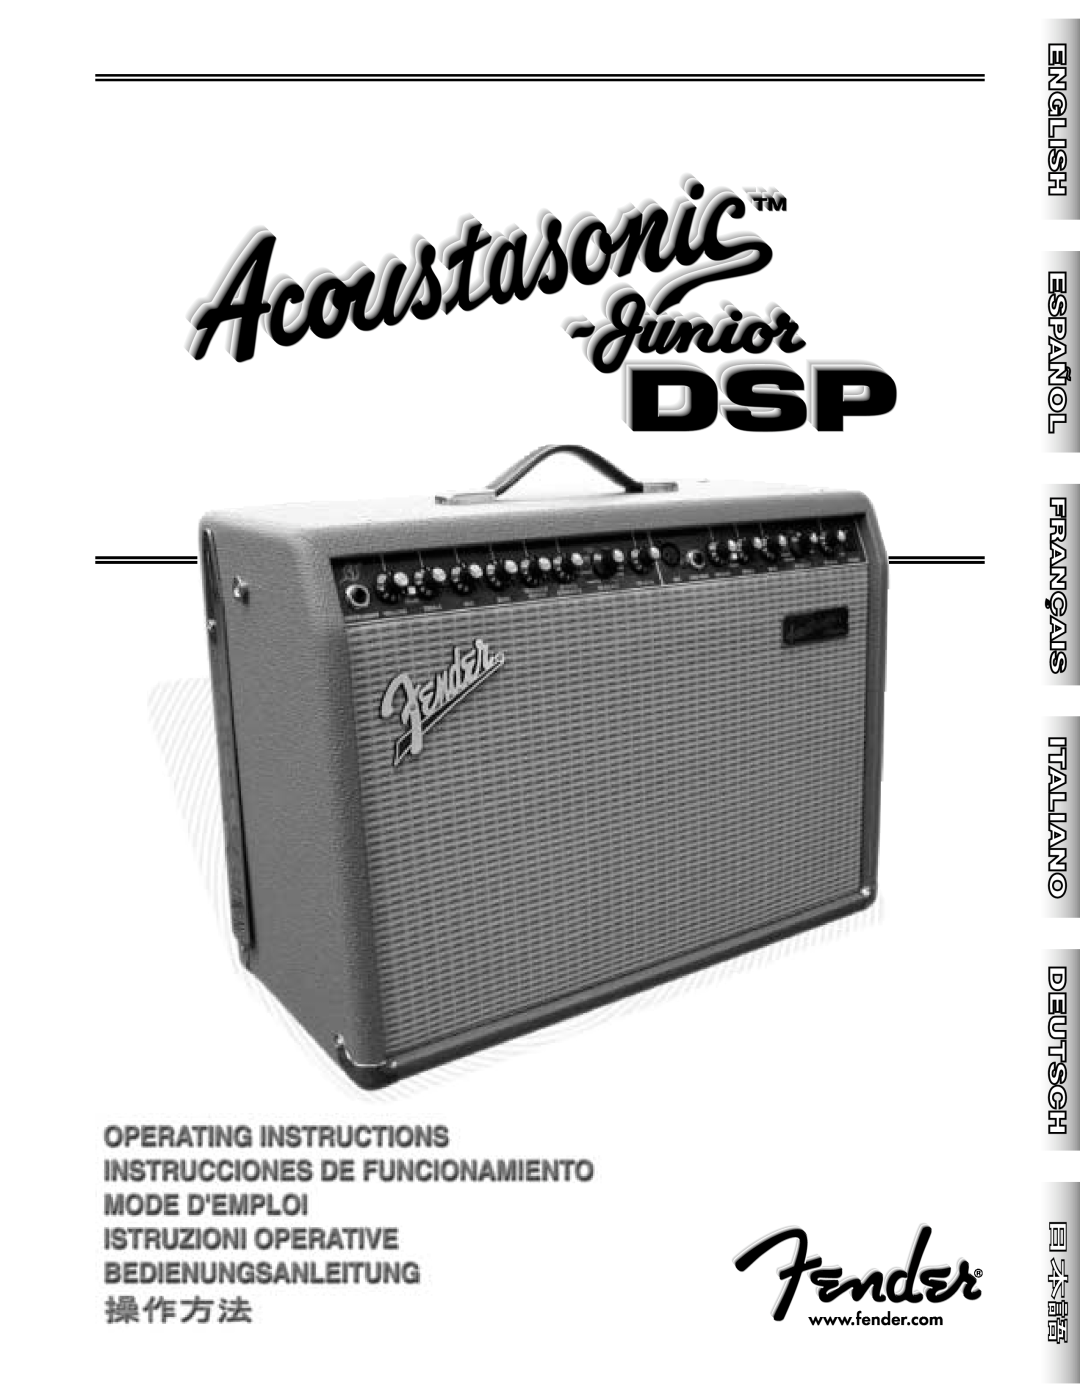 Fender Stereo Amplifier manual 